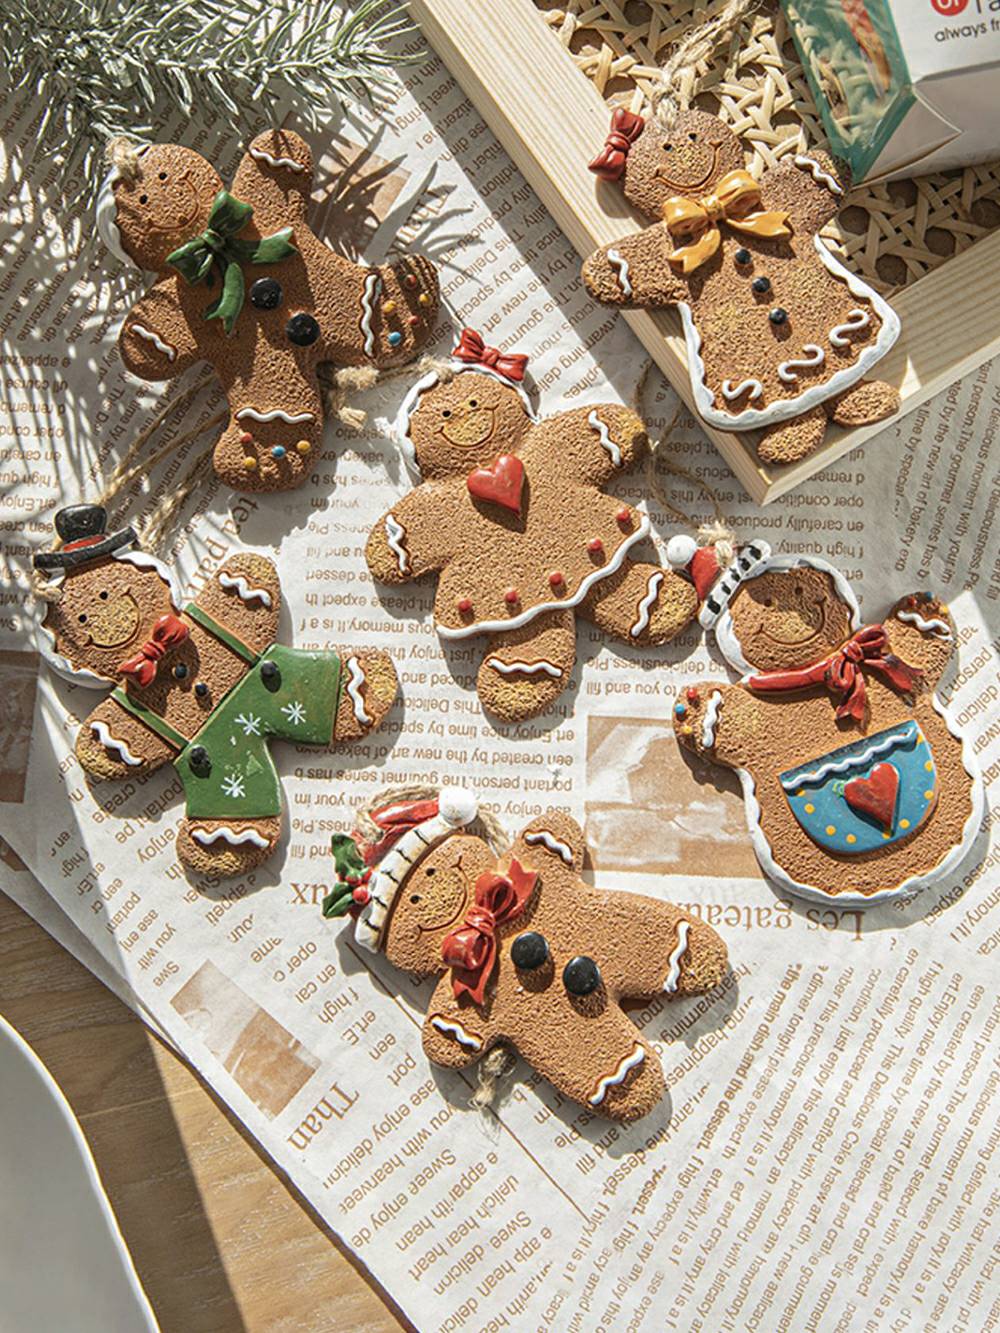 Christmas Tree Gingerbread Man Resin Hanging Decoration